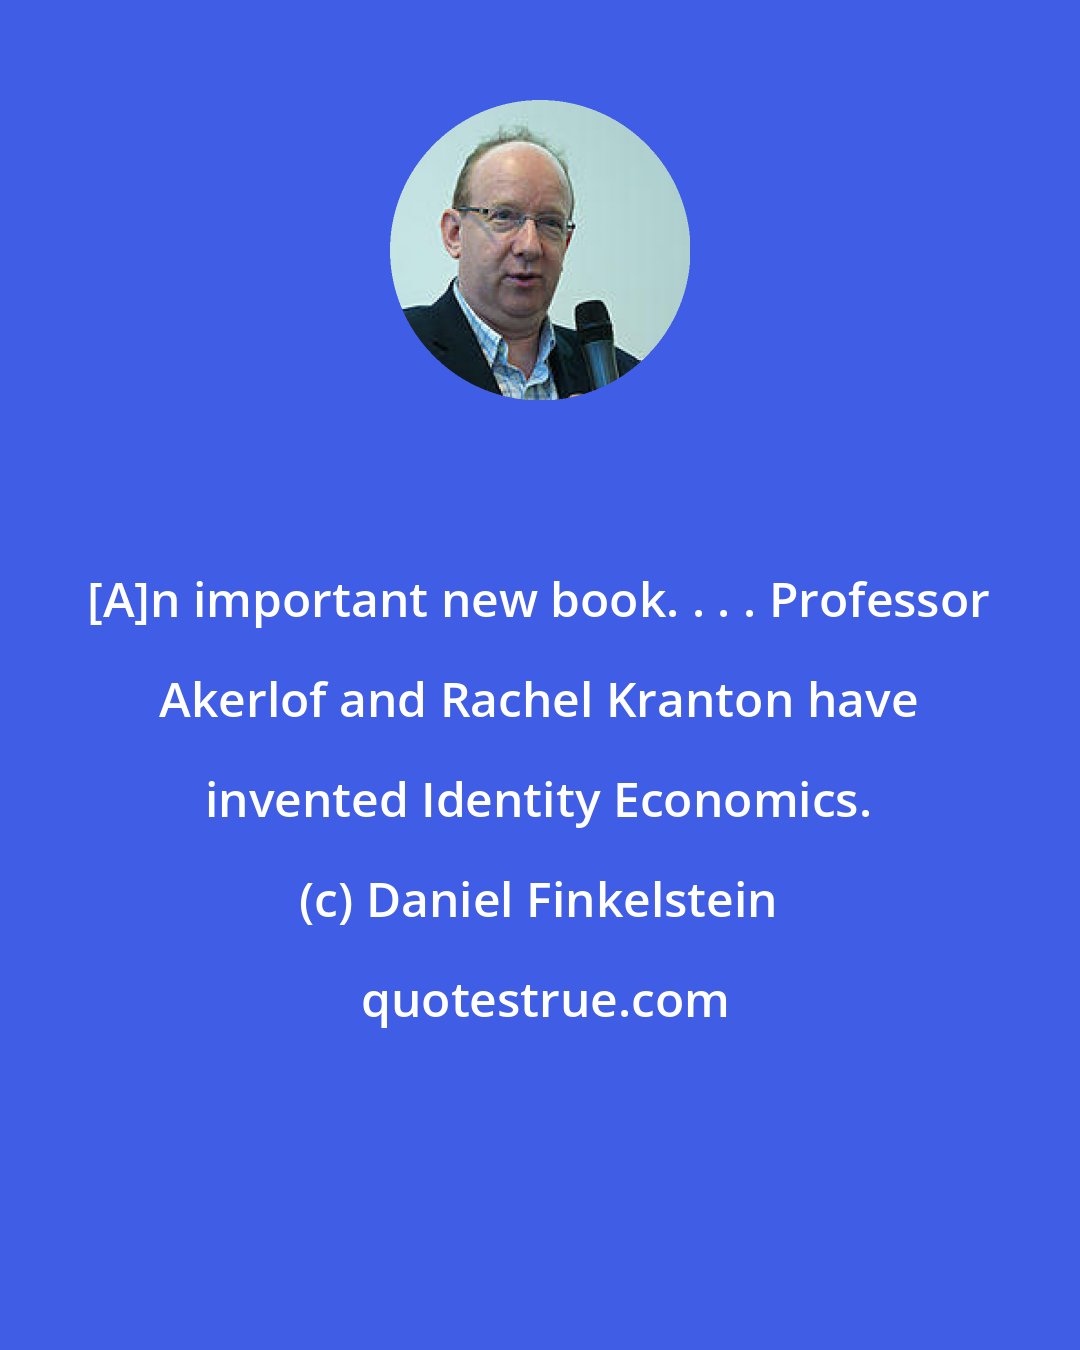 Daniel Finkelstein: [A]n important new book. . . . Professor Akerlof and Rachel Kranton have invented Identity Economics.